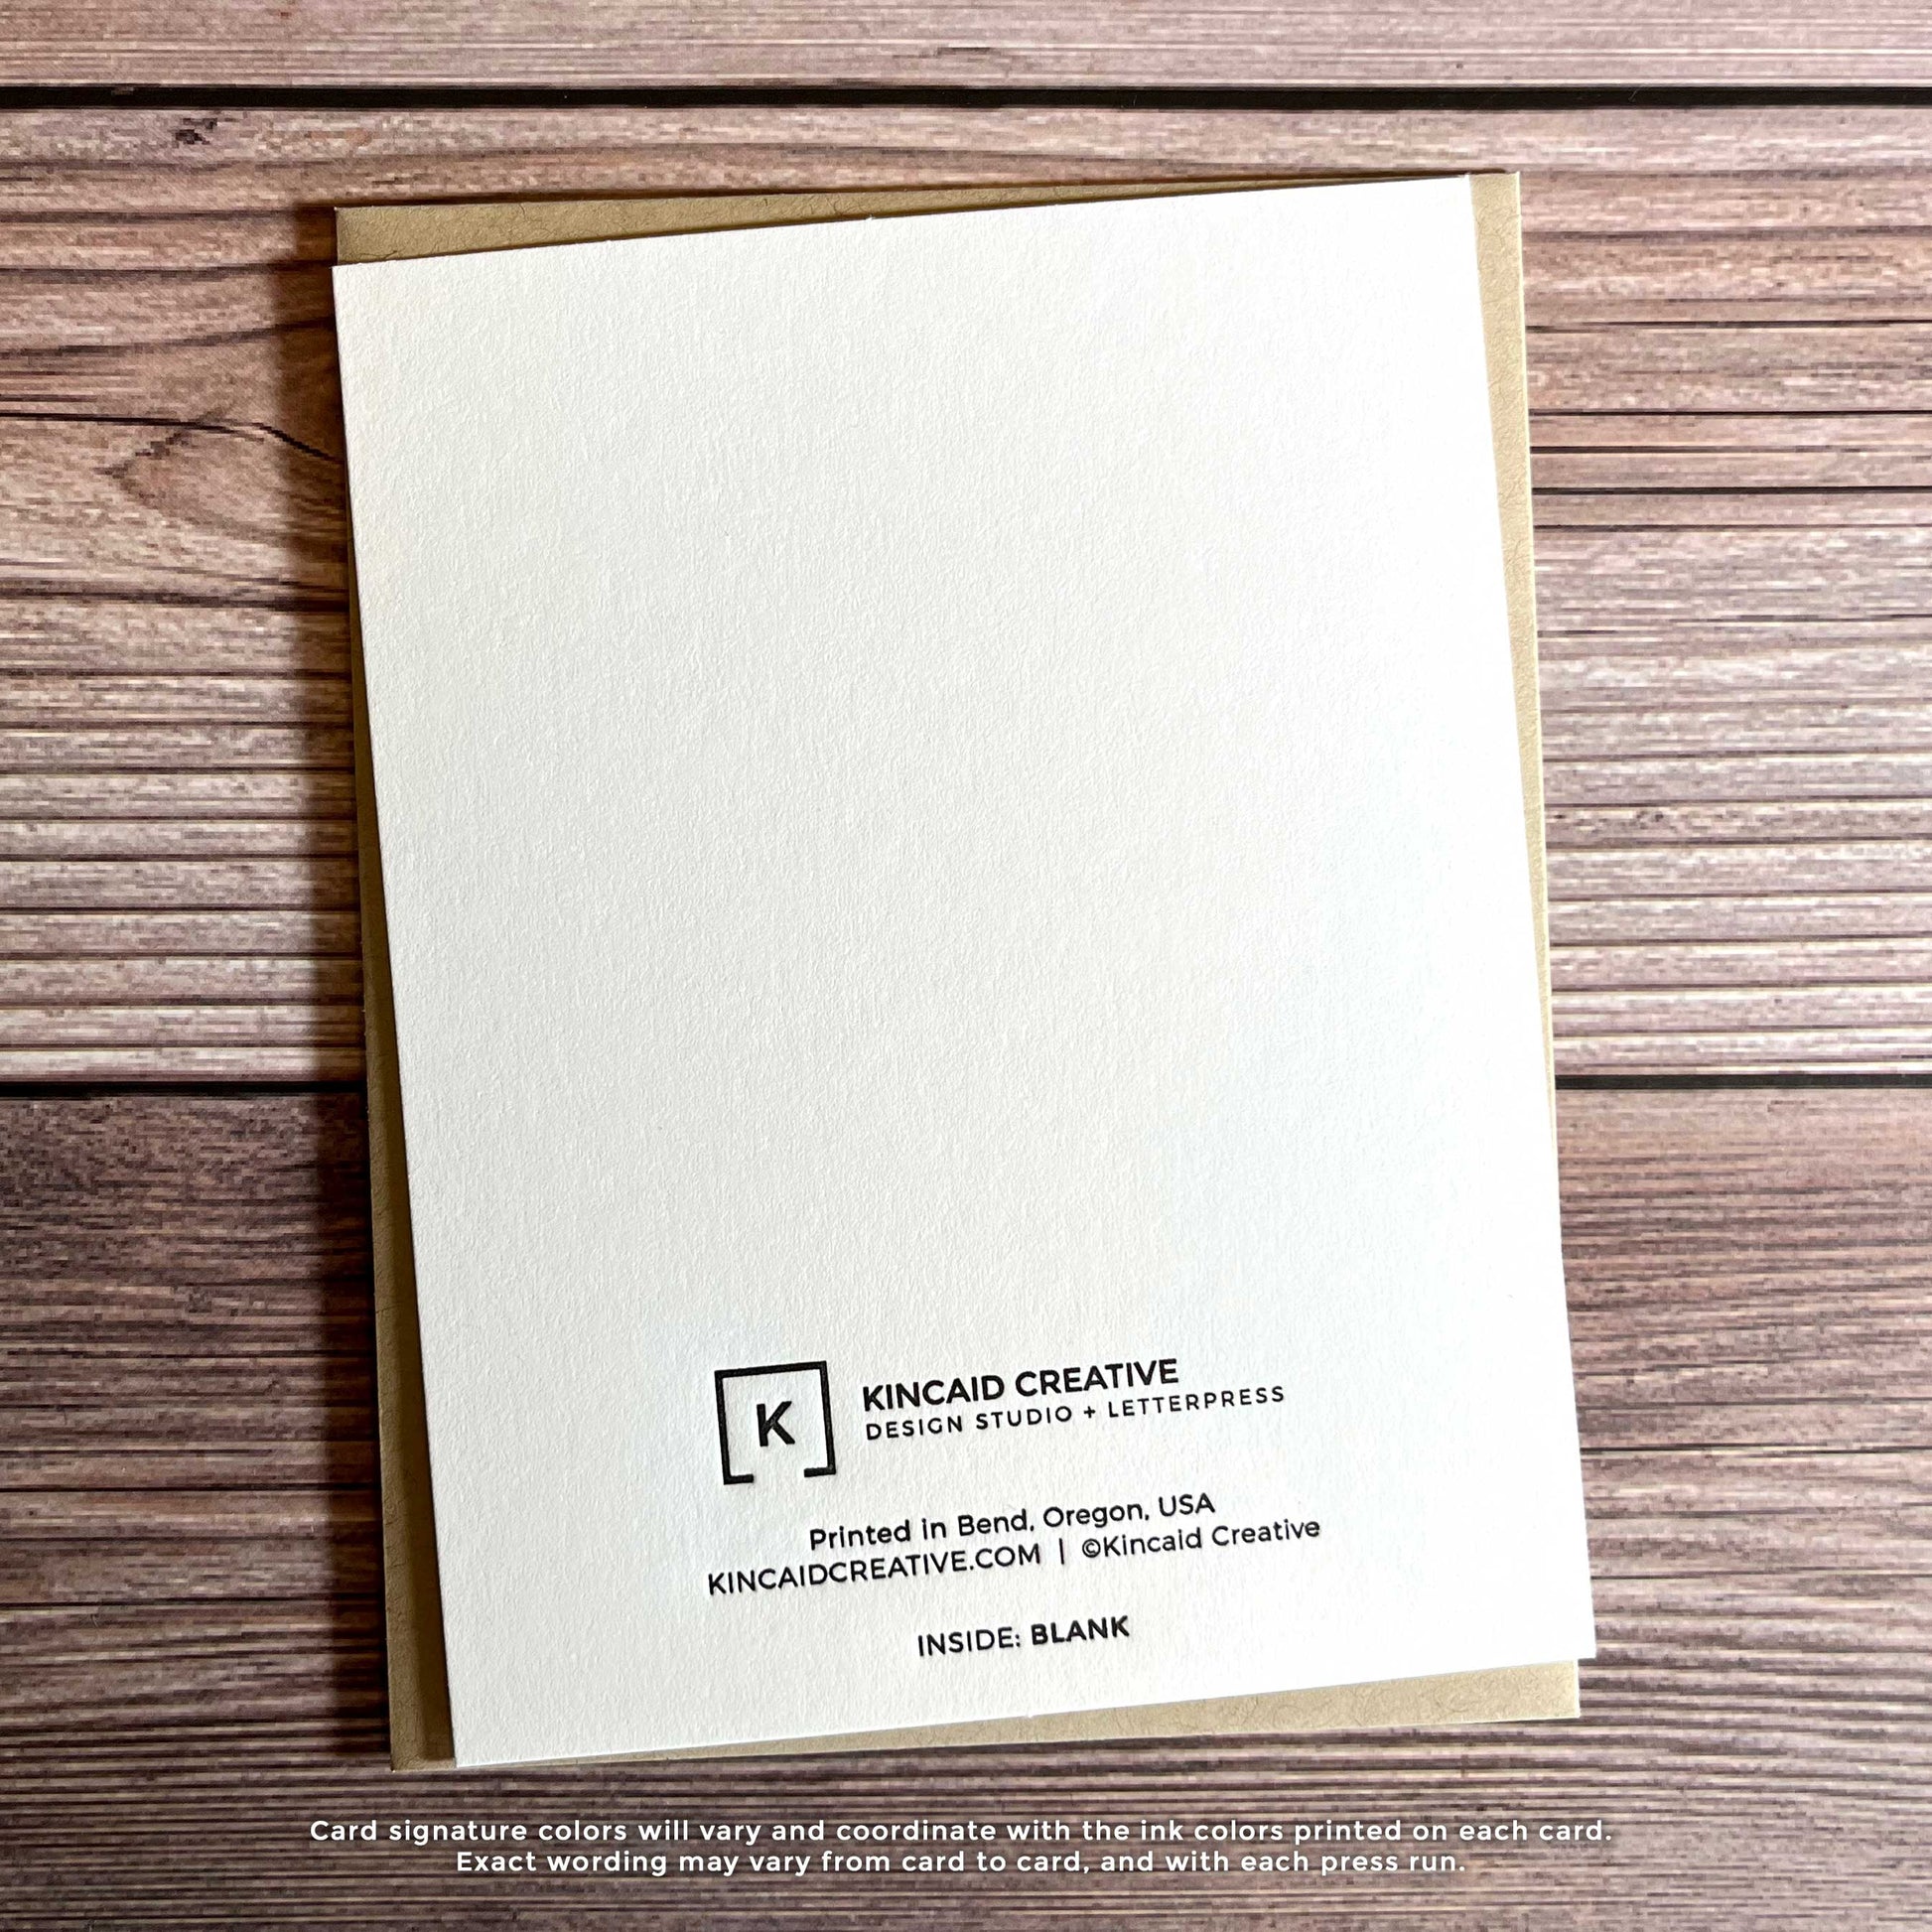 Letterpress Congratulations greeting card, blank inside, back view of card, Kincaid Creative Design and Letterpress Studio, Bend, Oregon